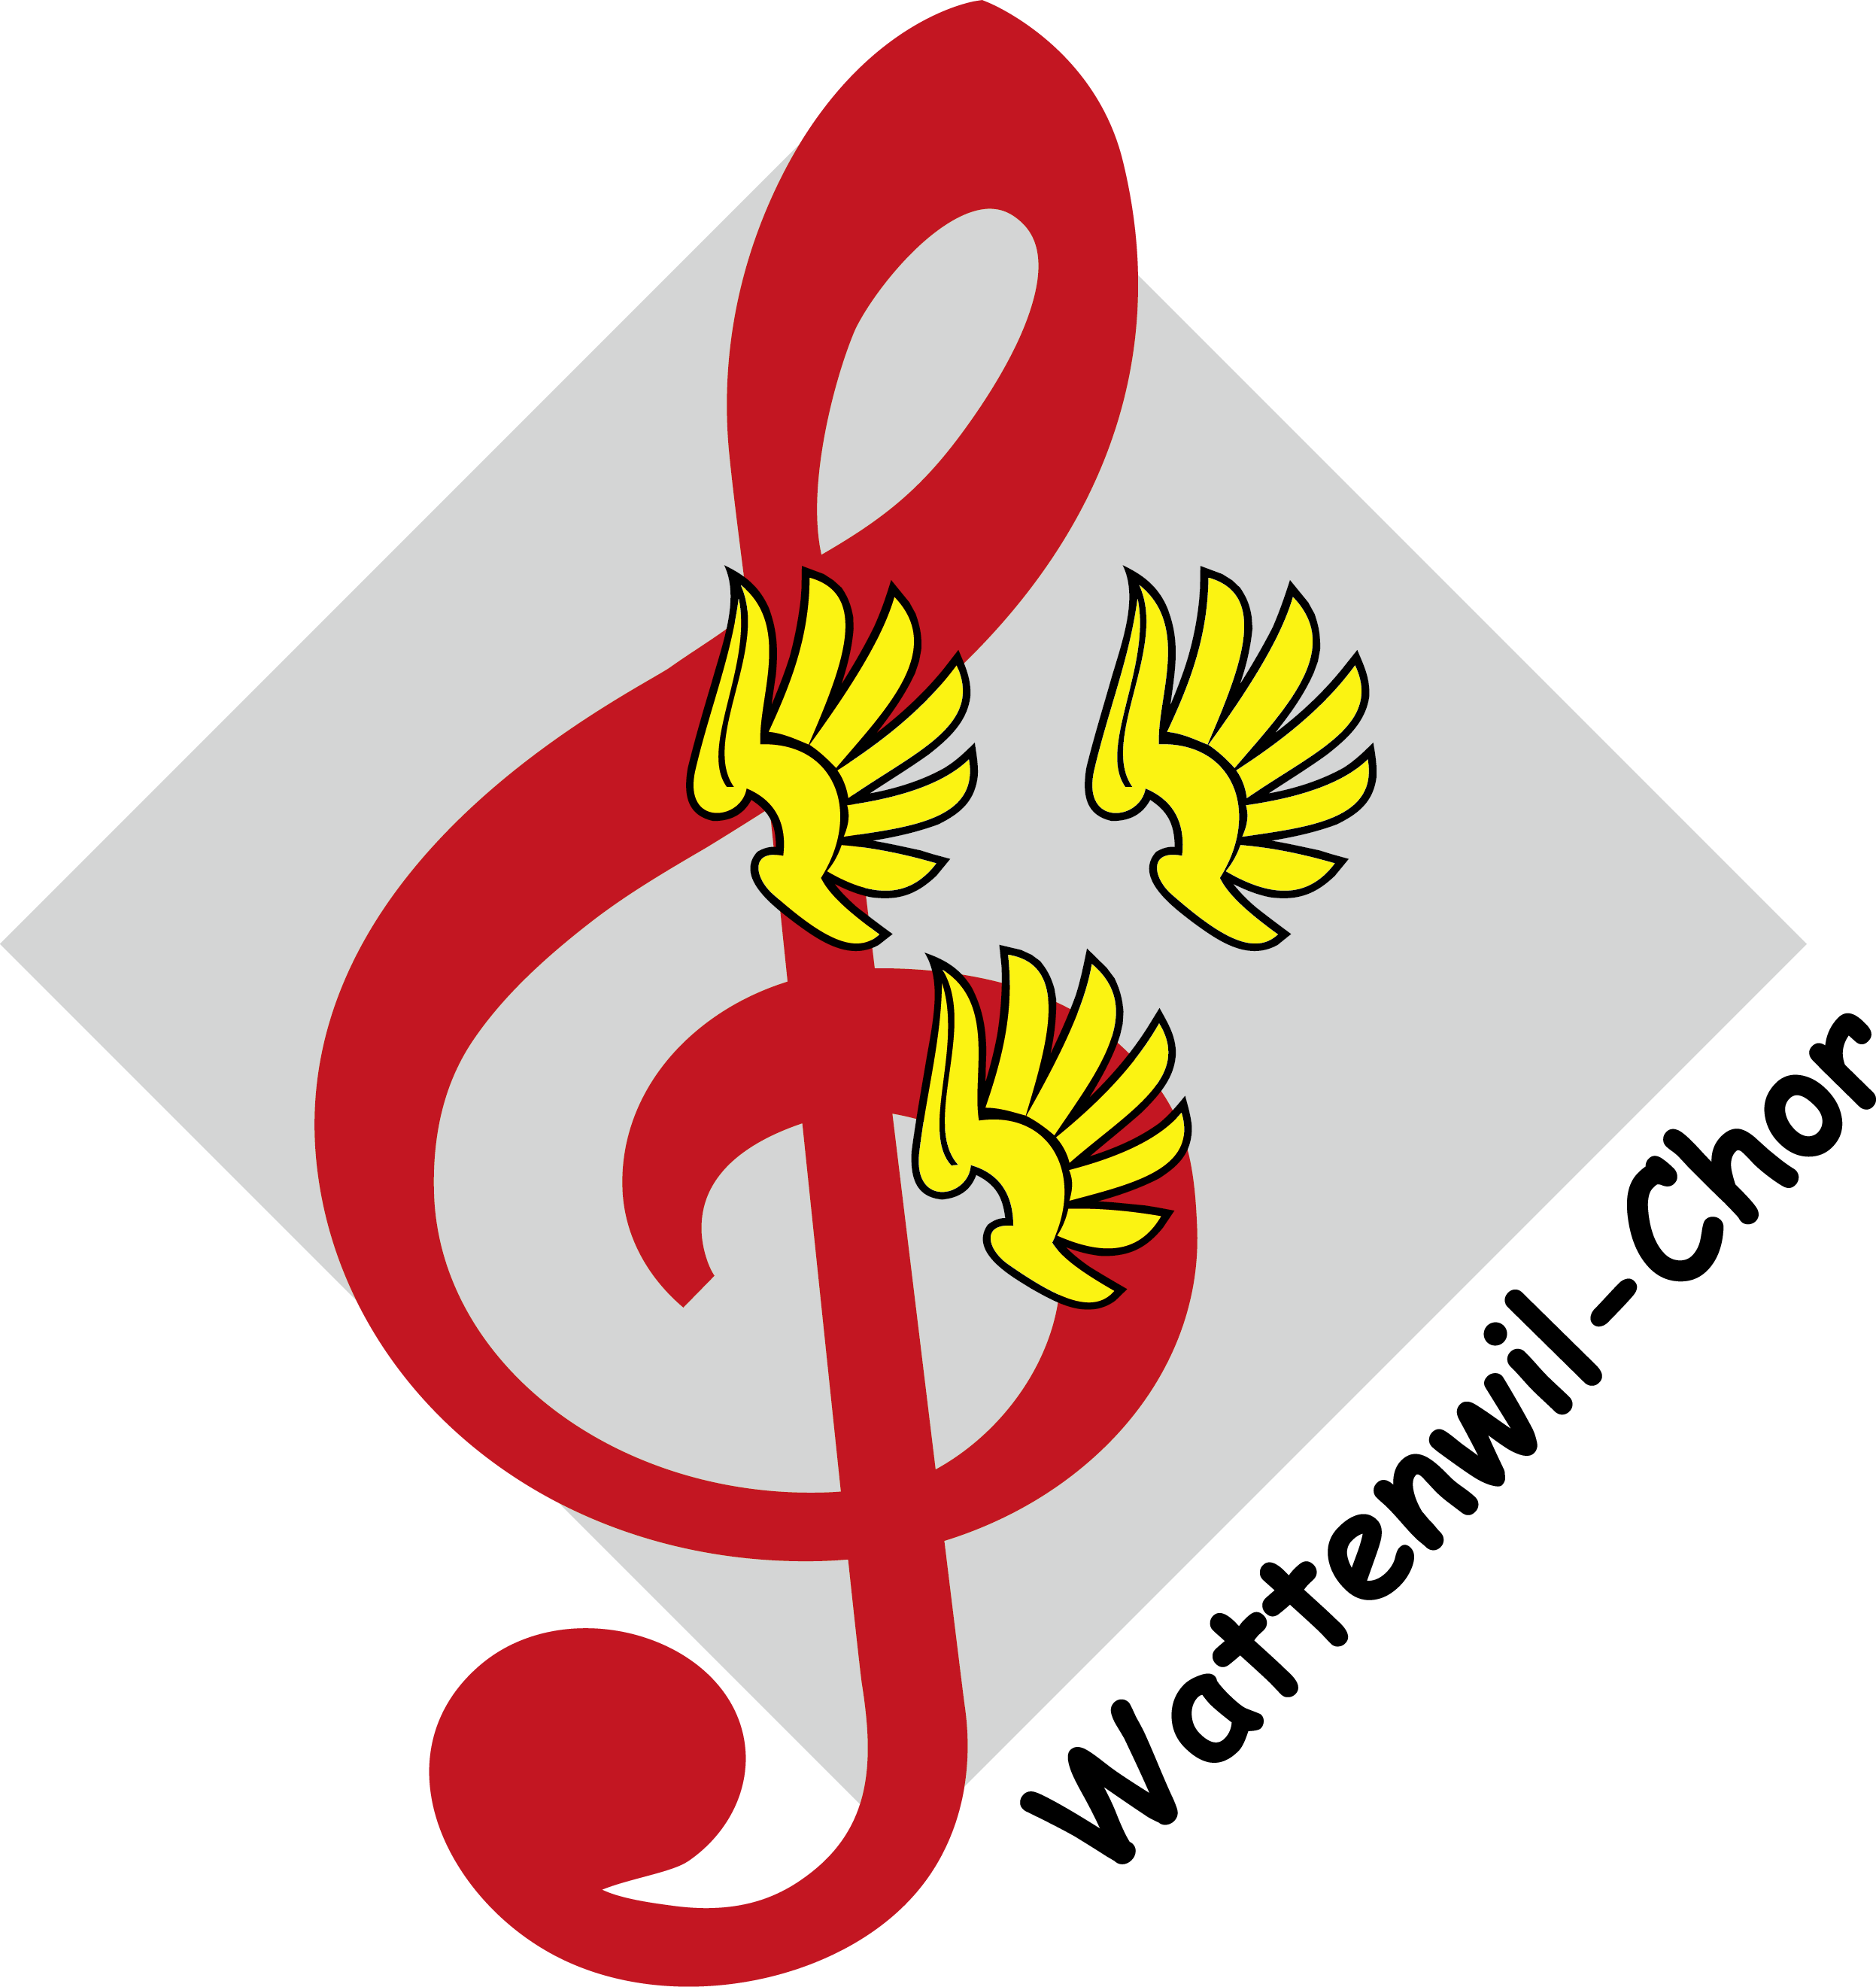 Wattenwil-Chor